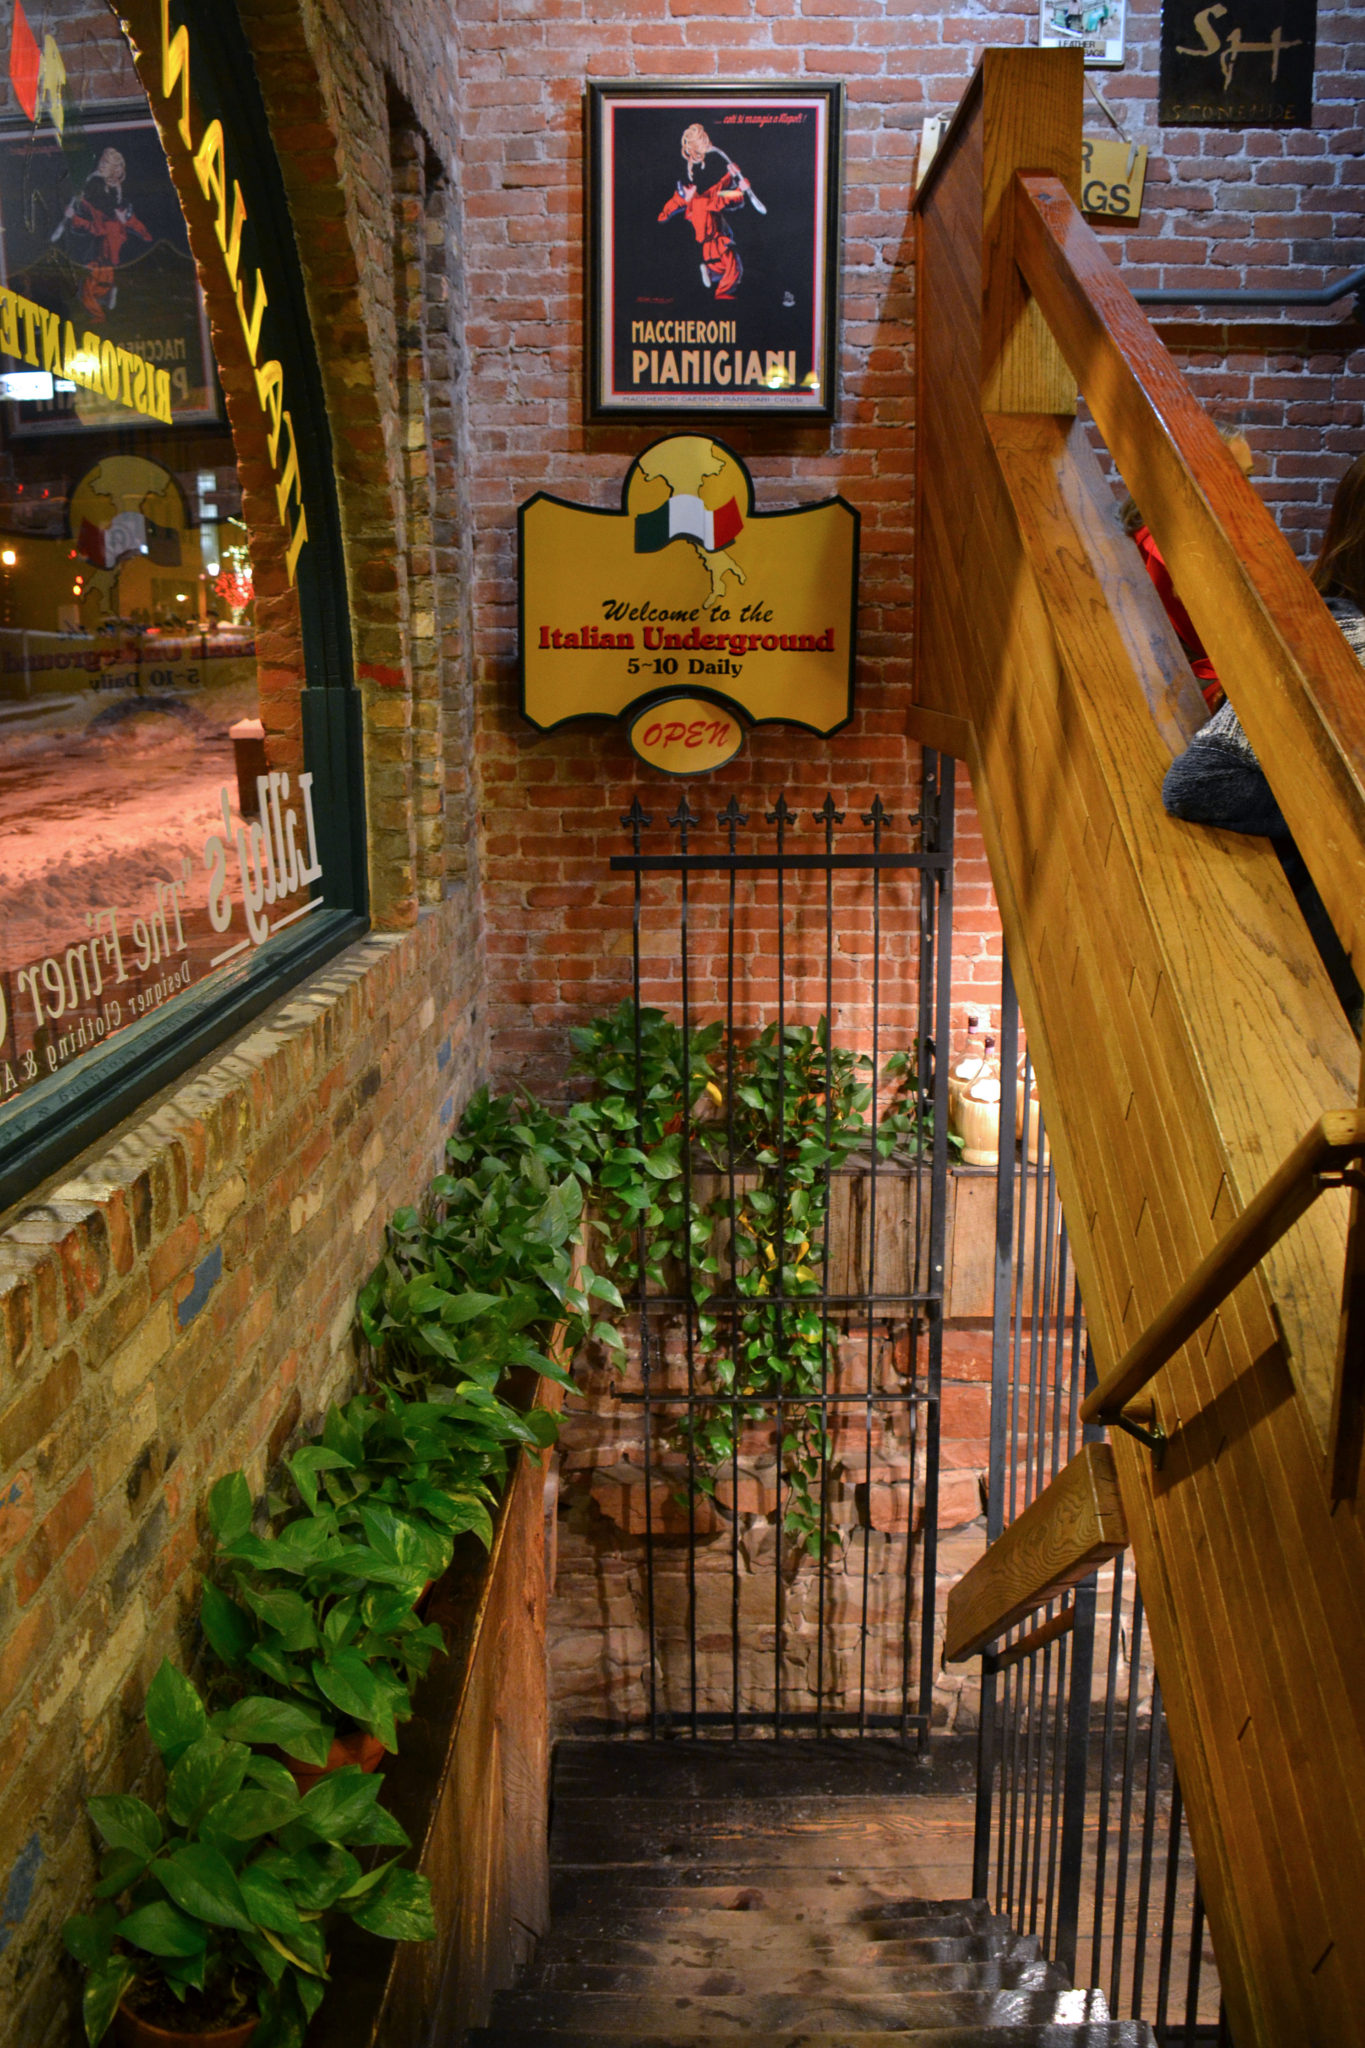 The entrance to the Underground Italian Restaurant